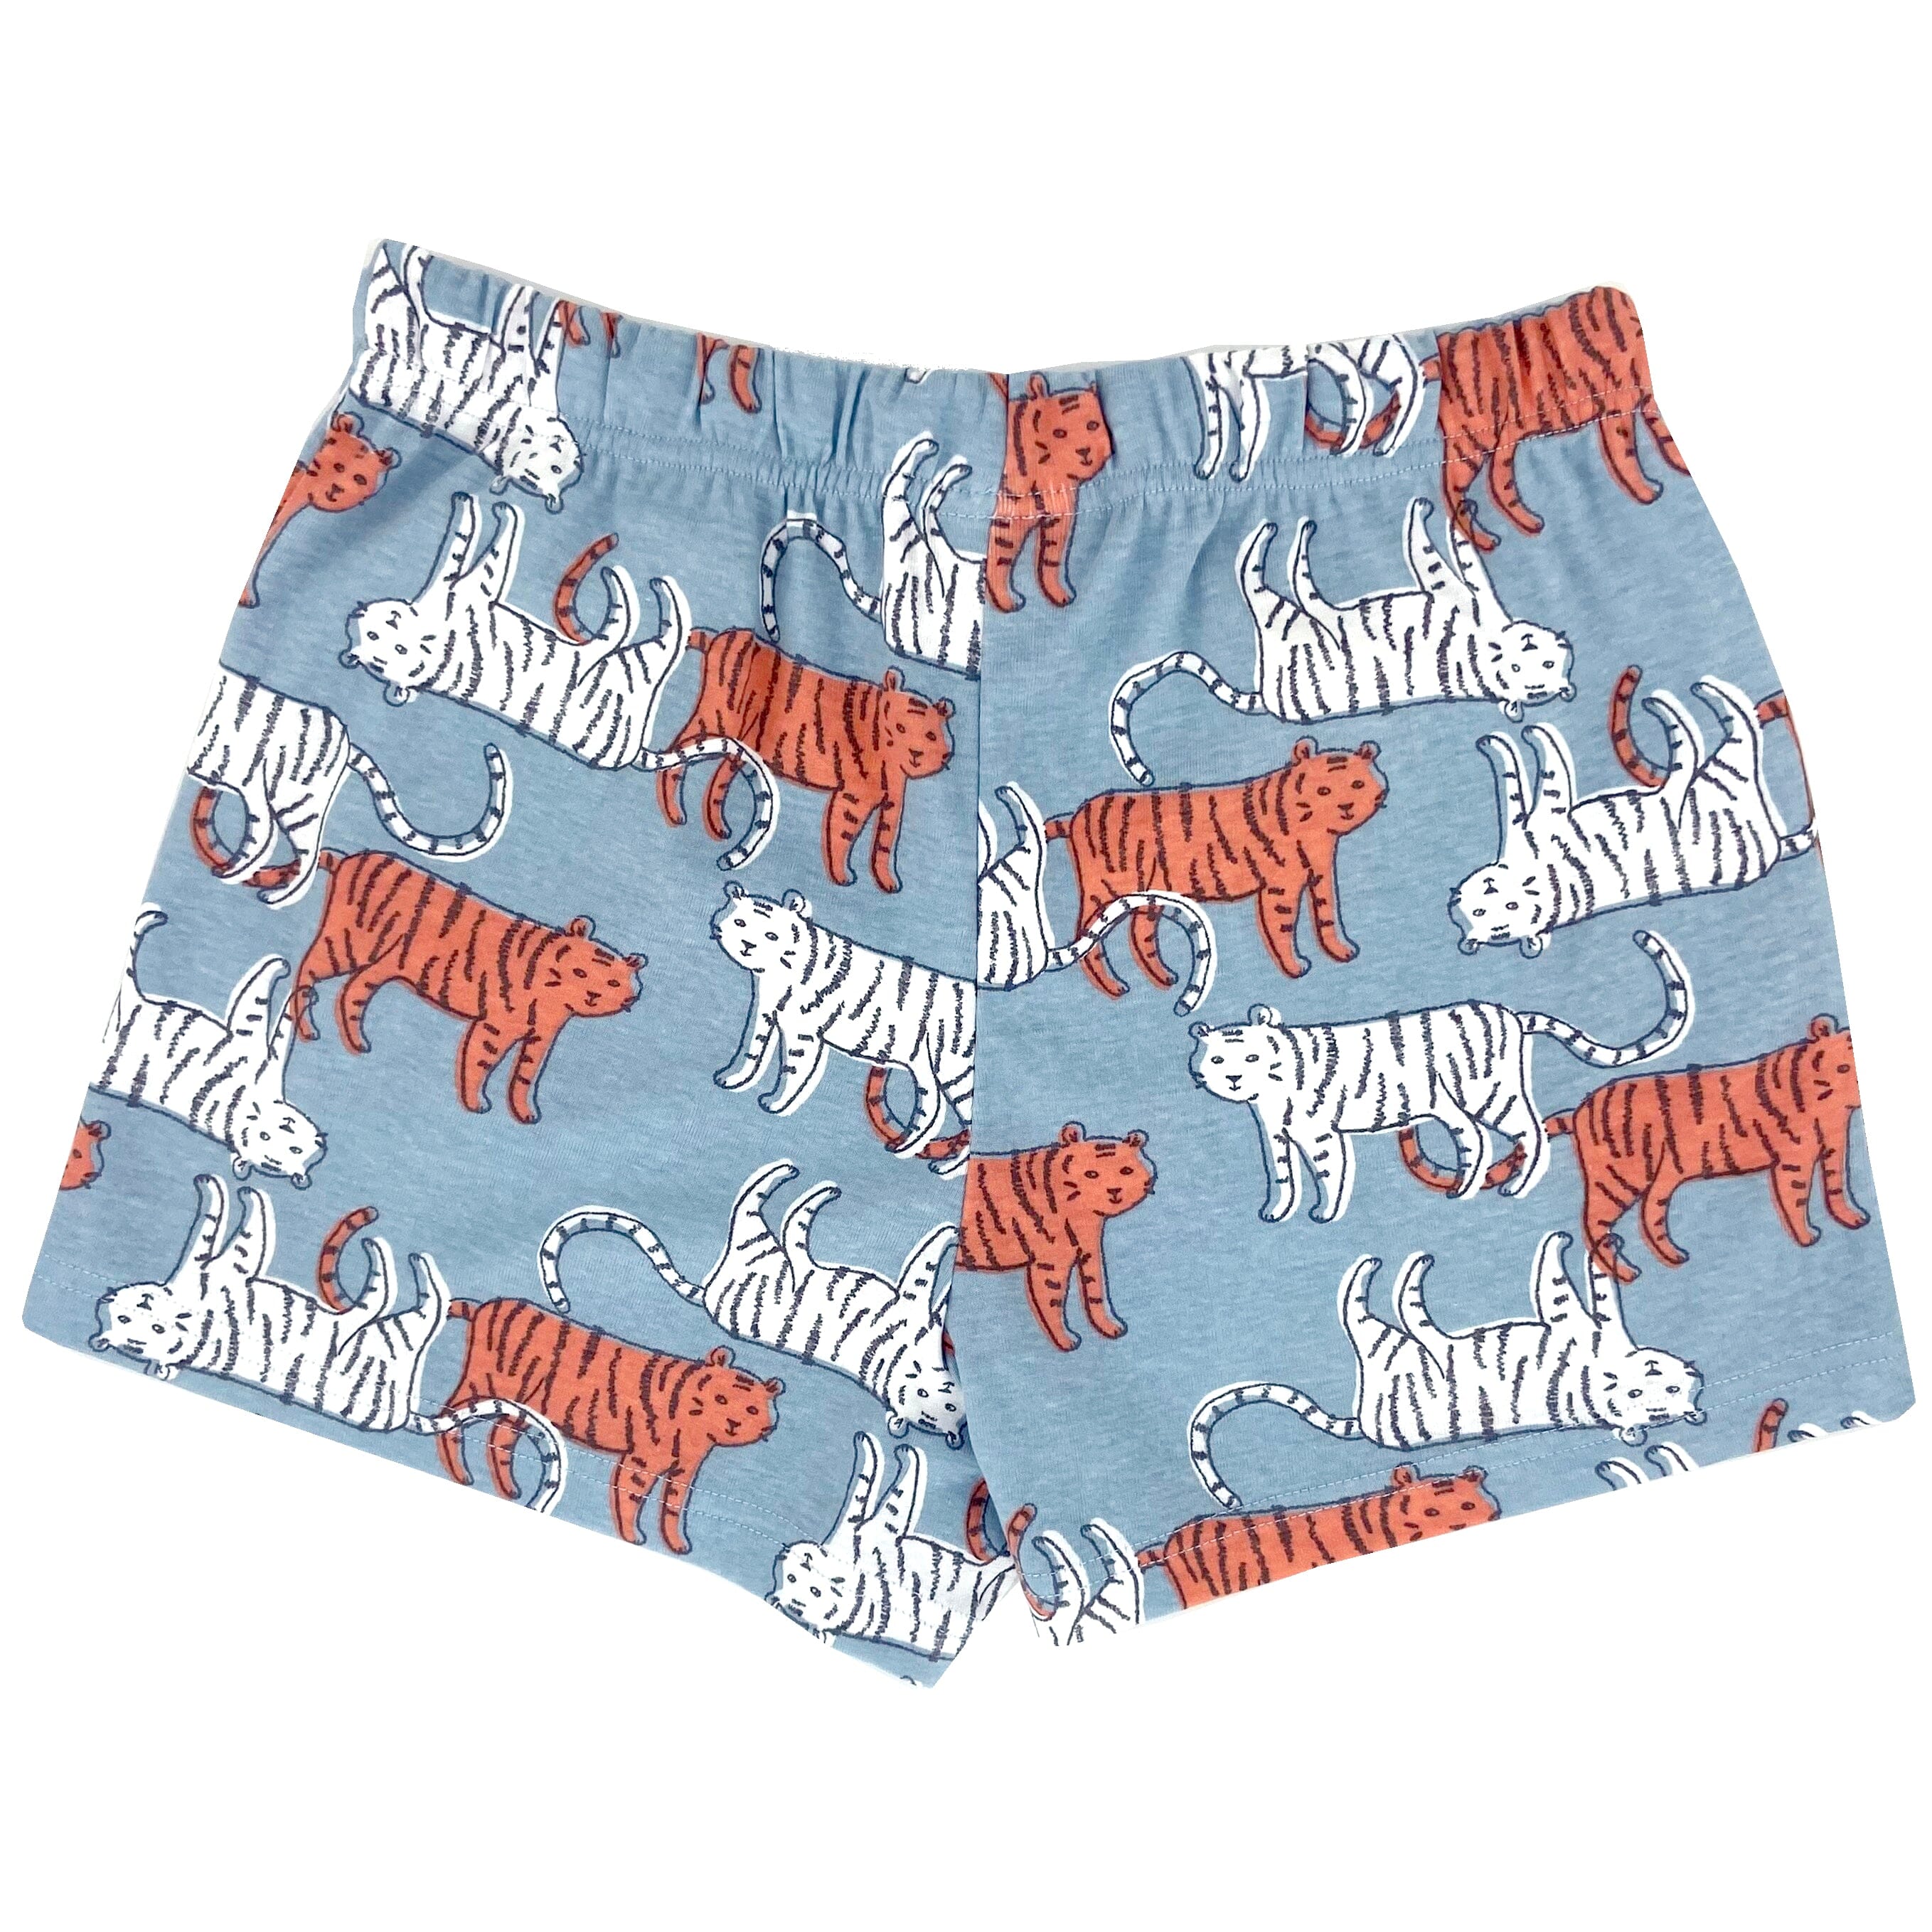 Women's Cartoon Tiger Cat Patterned Cotton Knit PJ Pyjama Shorts